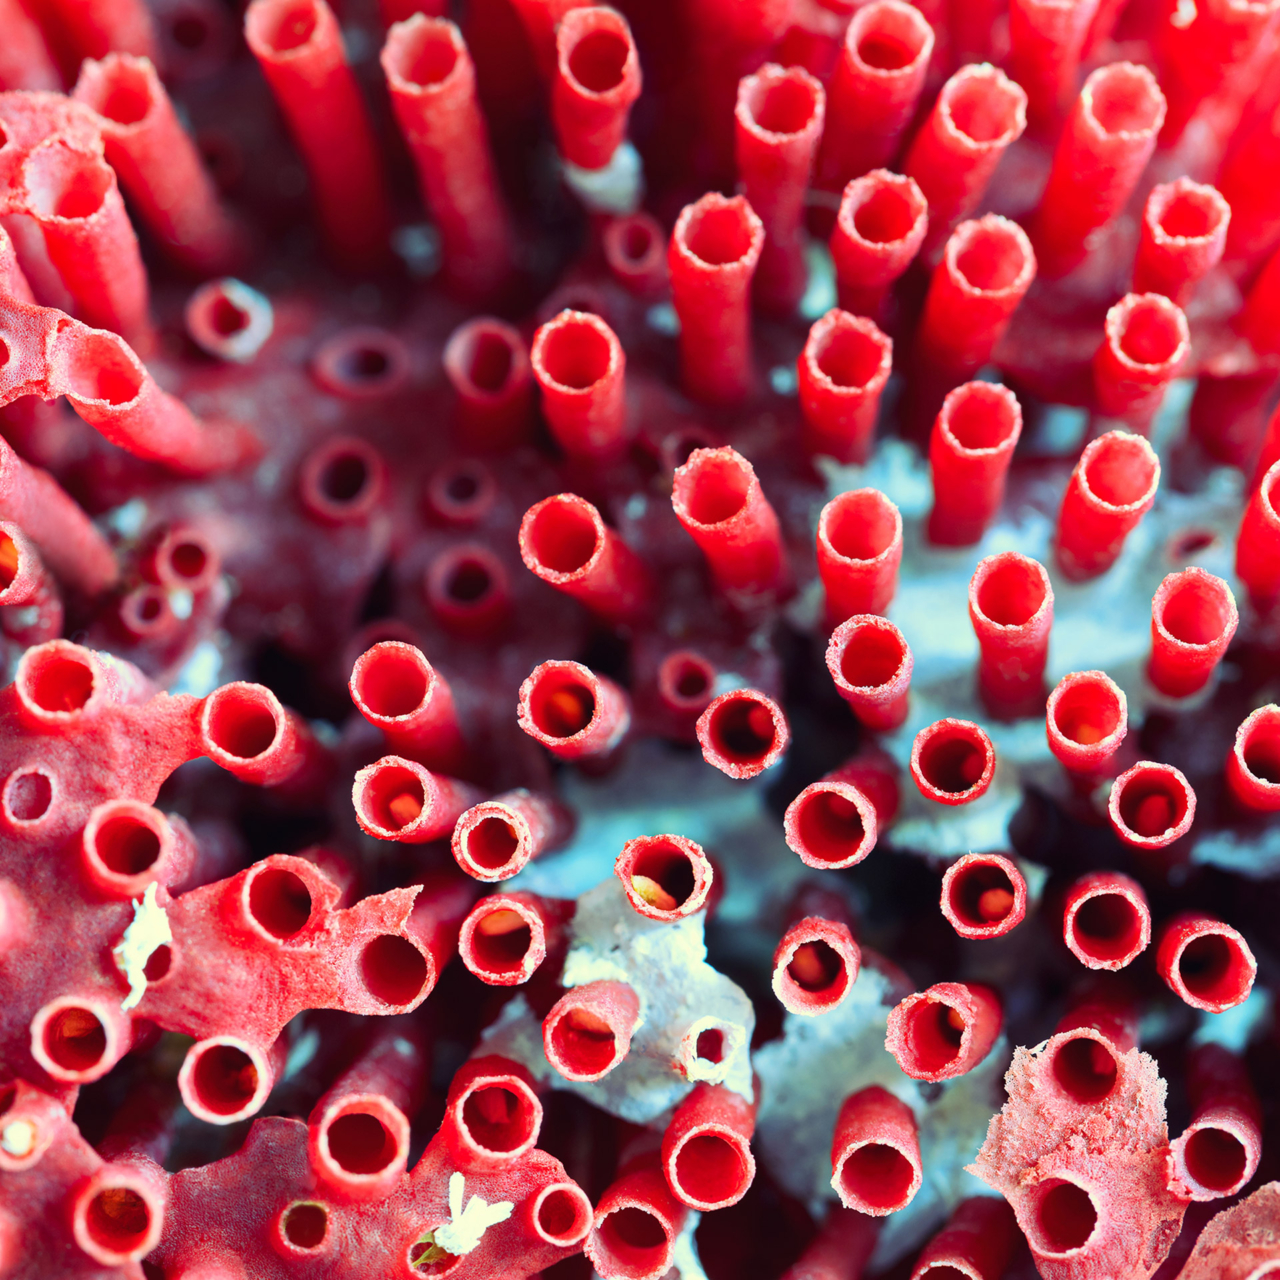 glowing gone red coral anenglishman